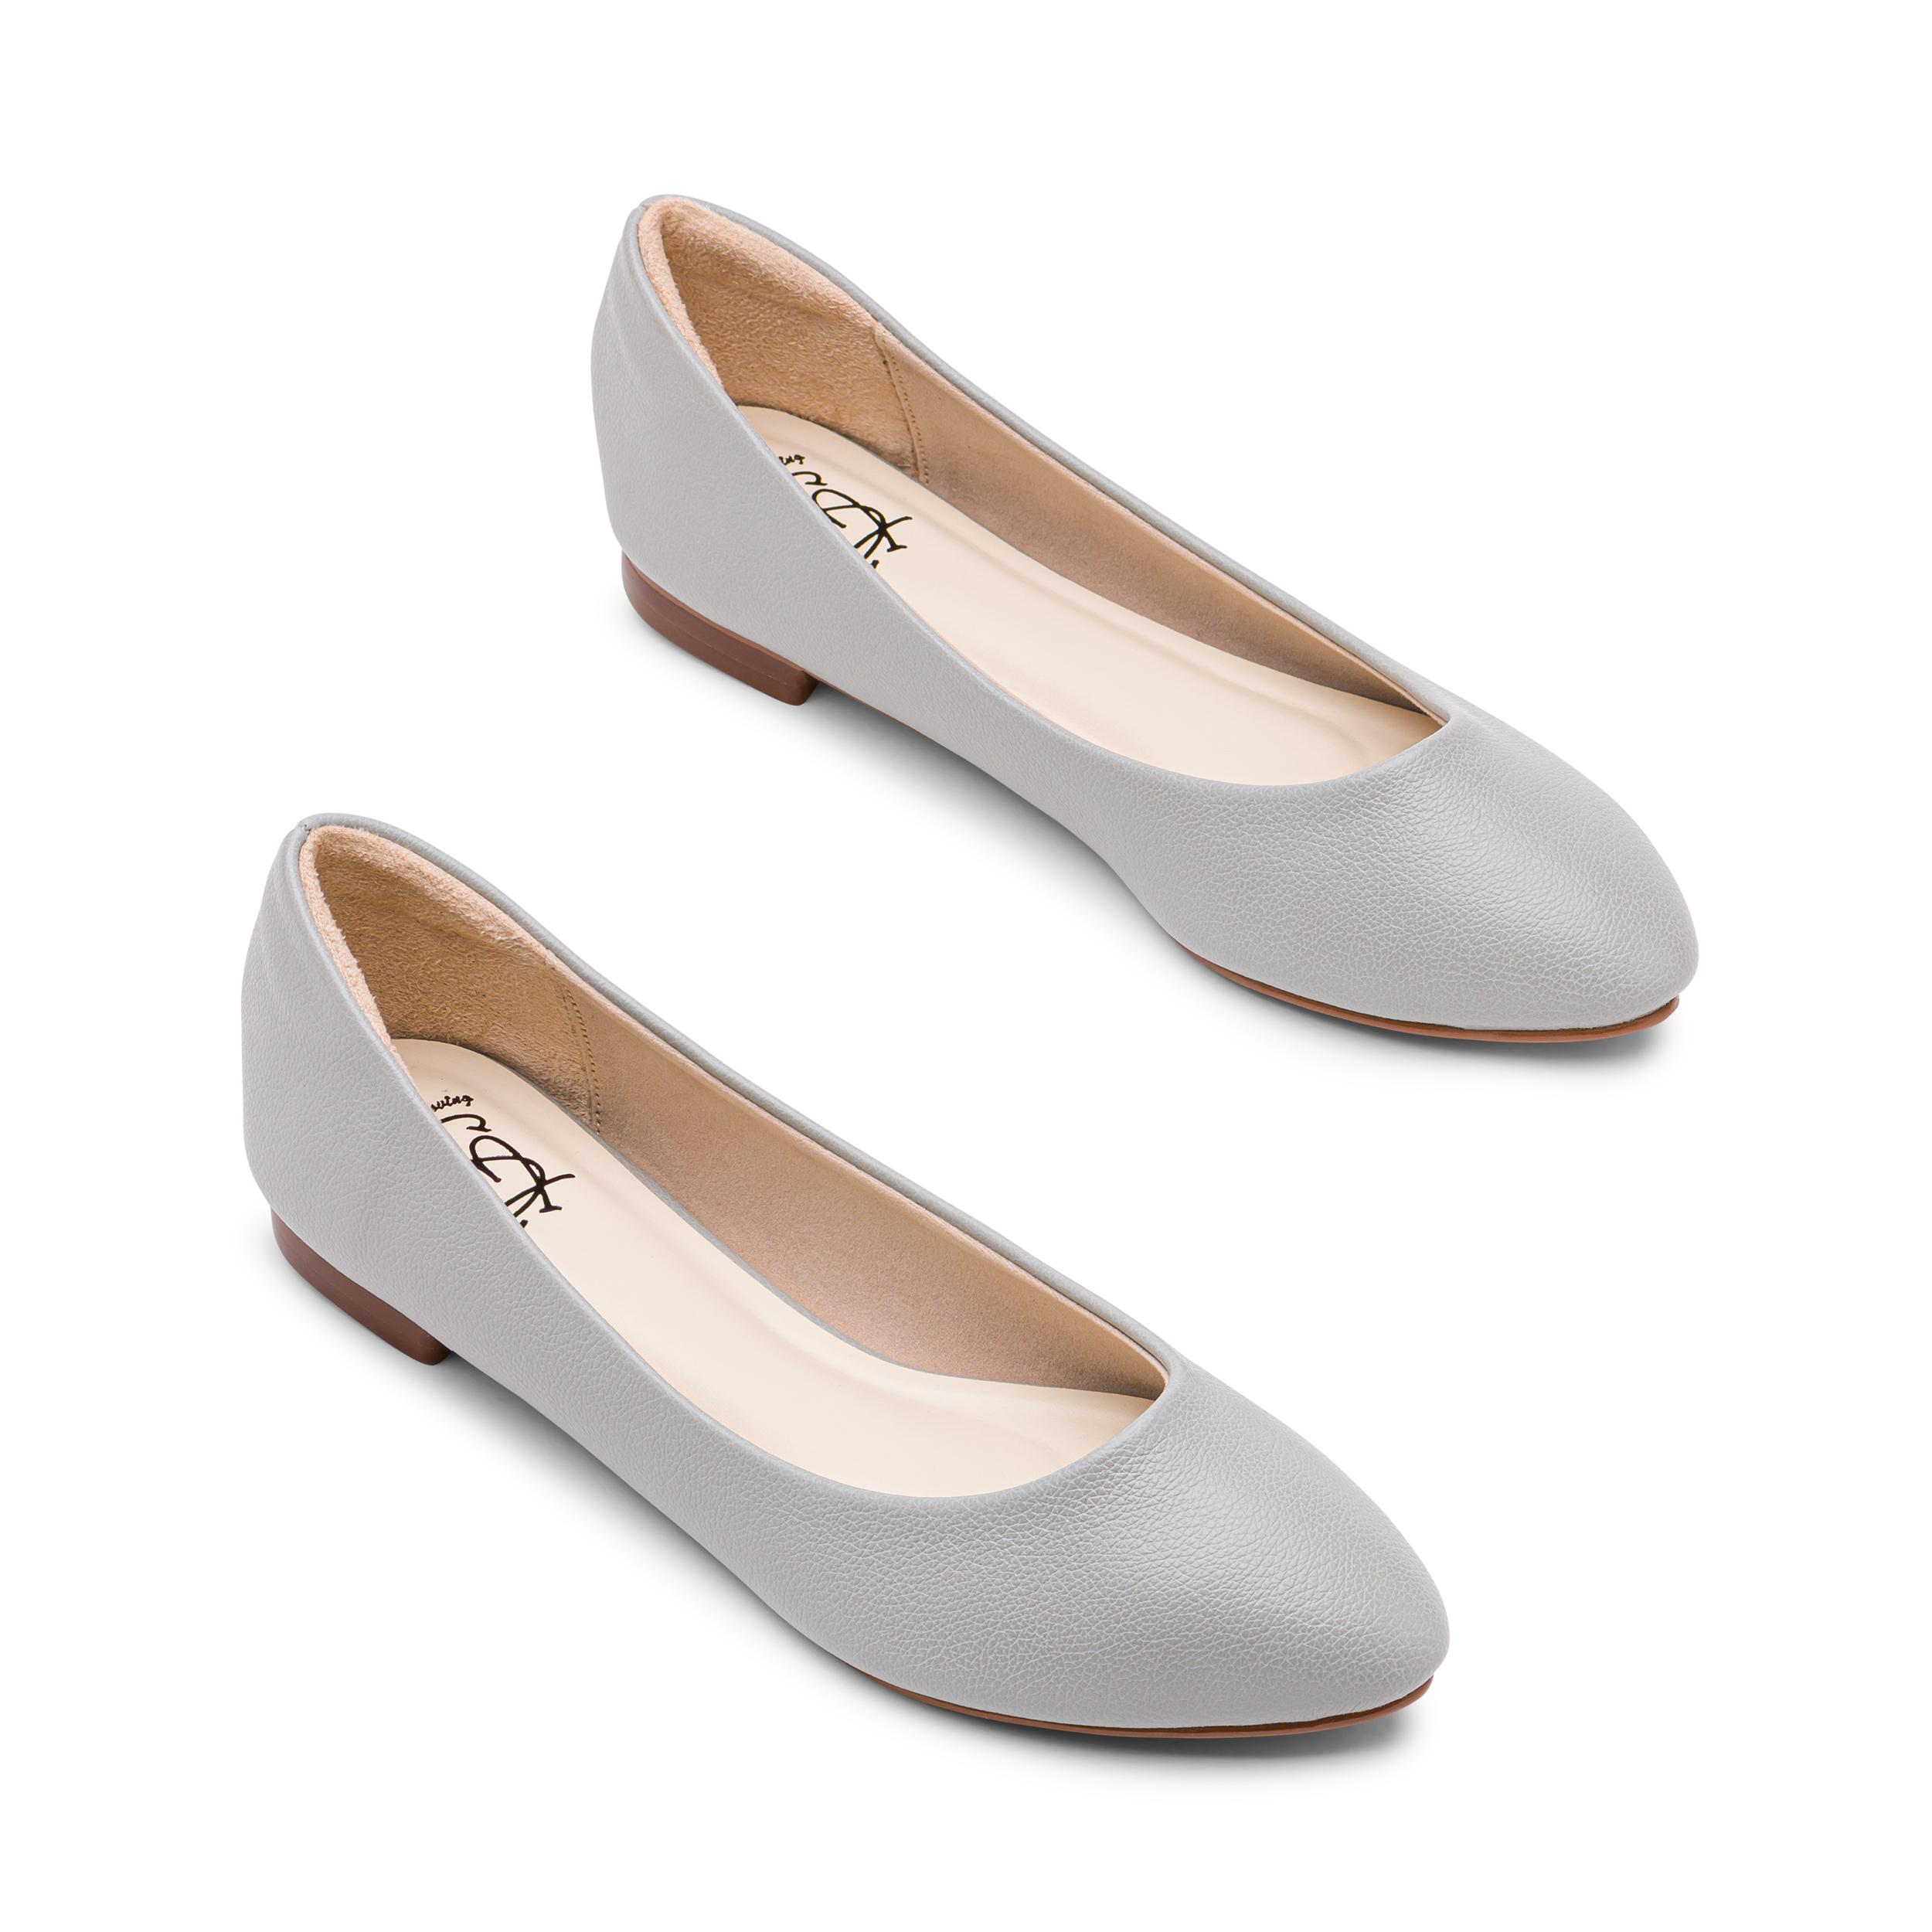 Ms.Choo Pointed Flats MONA : Grey / รองเท้าส้นเตี้ยหัวแหลม / รองเท้าบัลเล่ต์ / รองเท้าคัทชู สีเทา